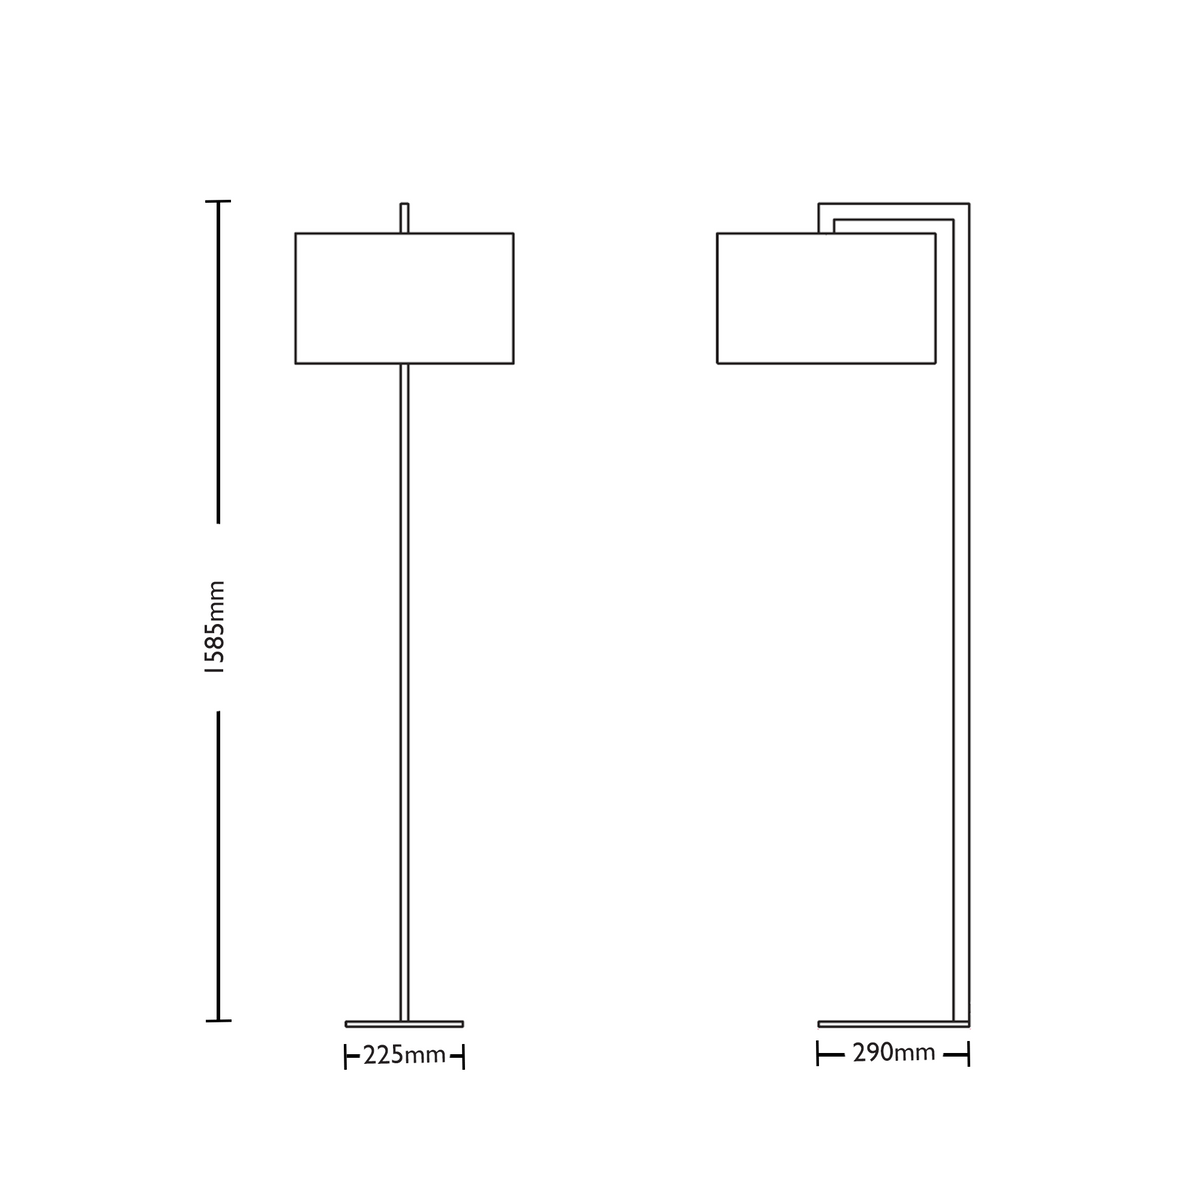 Dimensions for Astro Lighting Office Ravello Floor Lamp